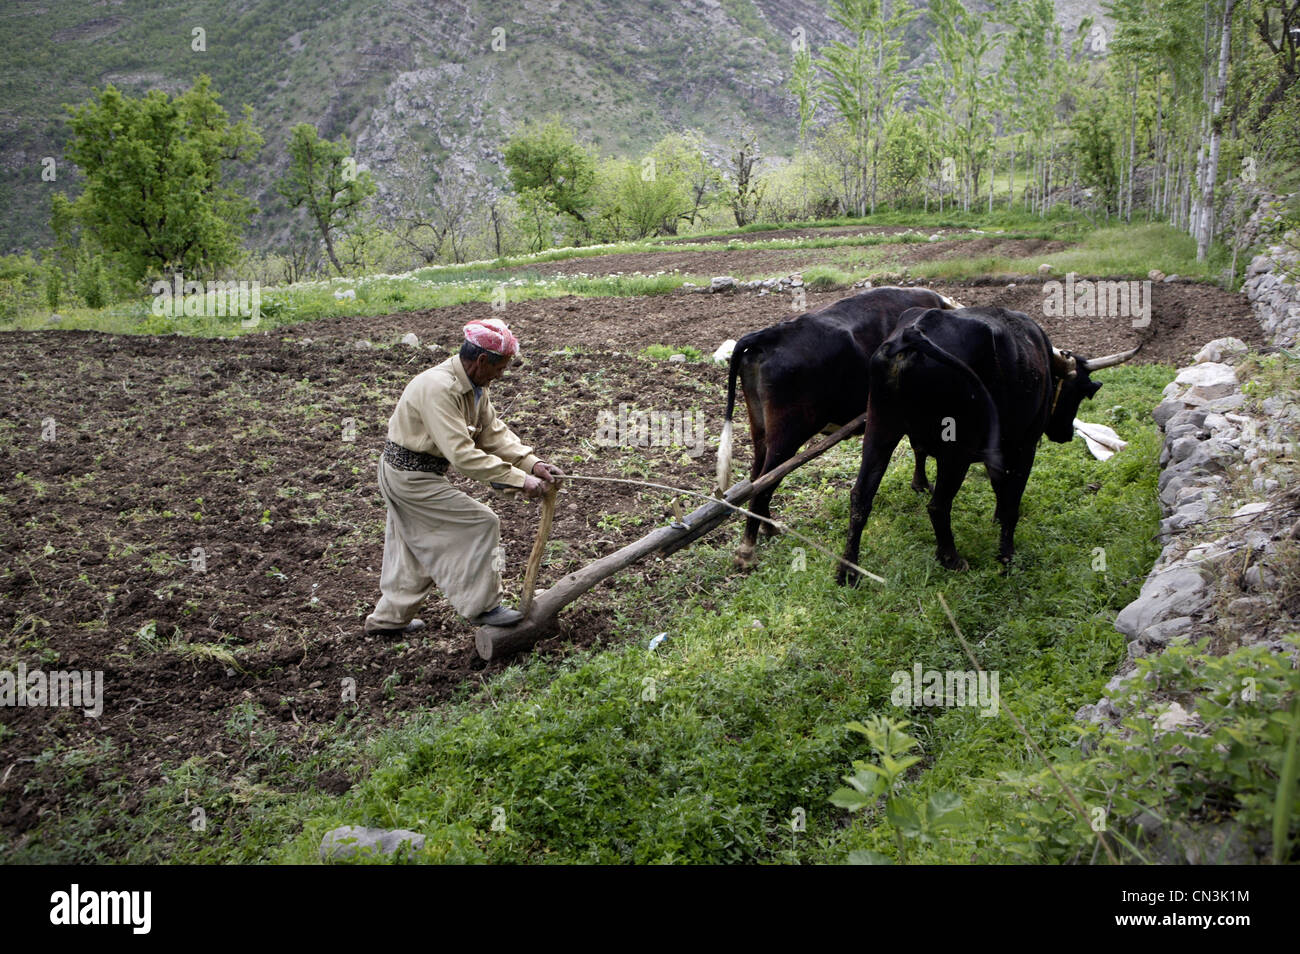 A farmer in Iraqi Kurdistan plowing with his oxen. Stock Photo